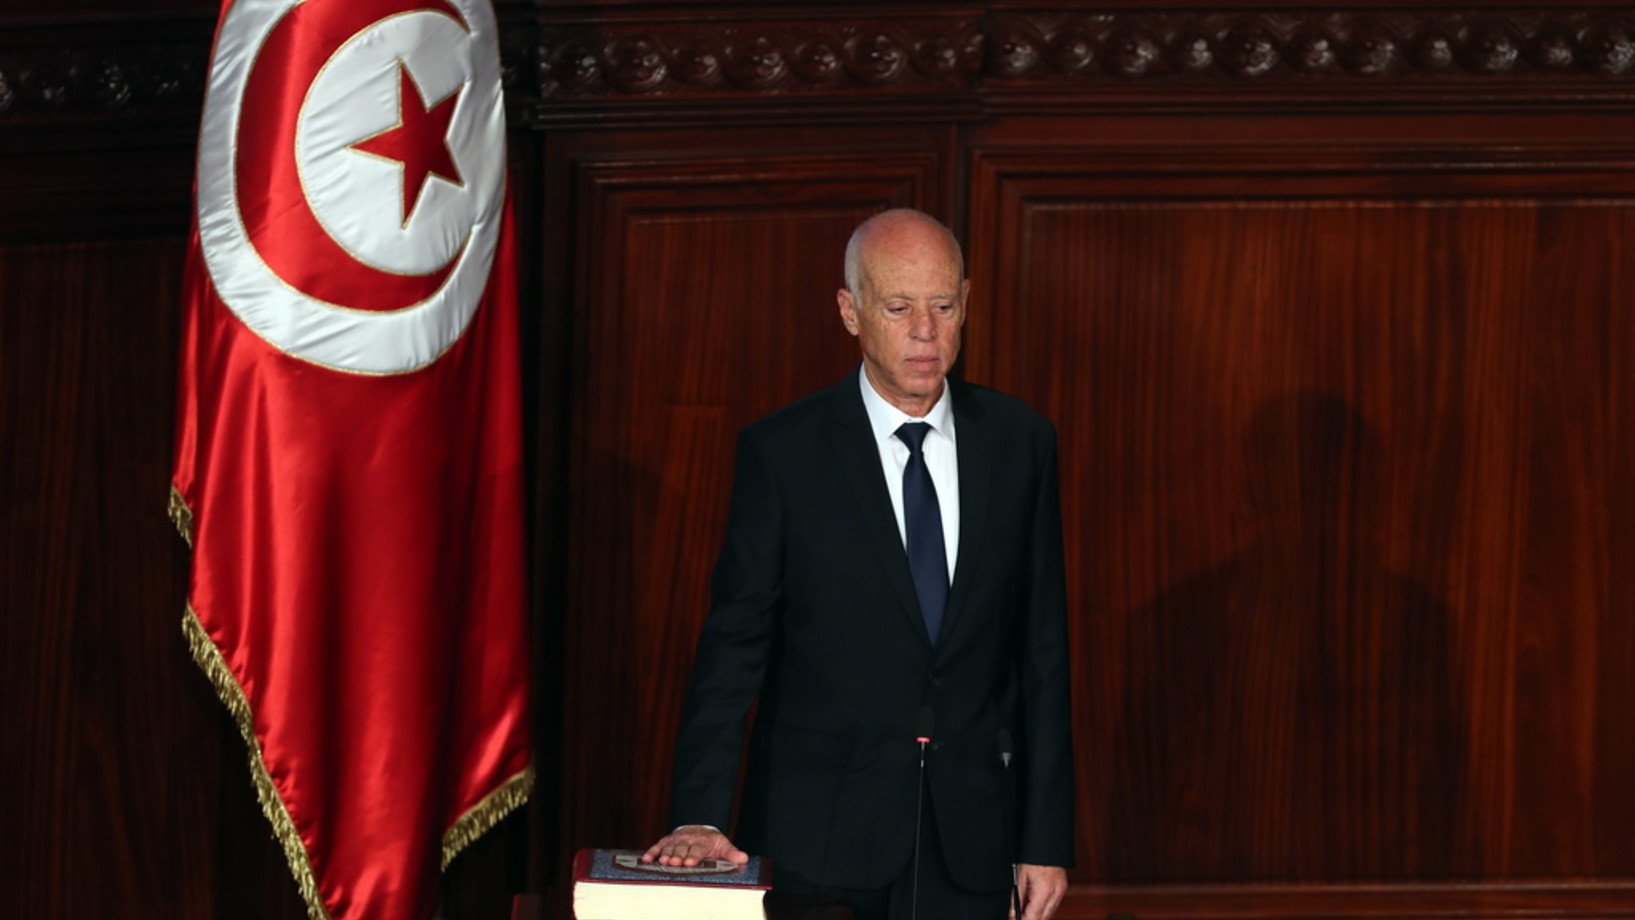 Der tunesische Präsident Kais Saied legt den Amtseid ab (Foto: Keystone/EPA/Mohamed Messara)